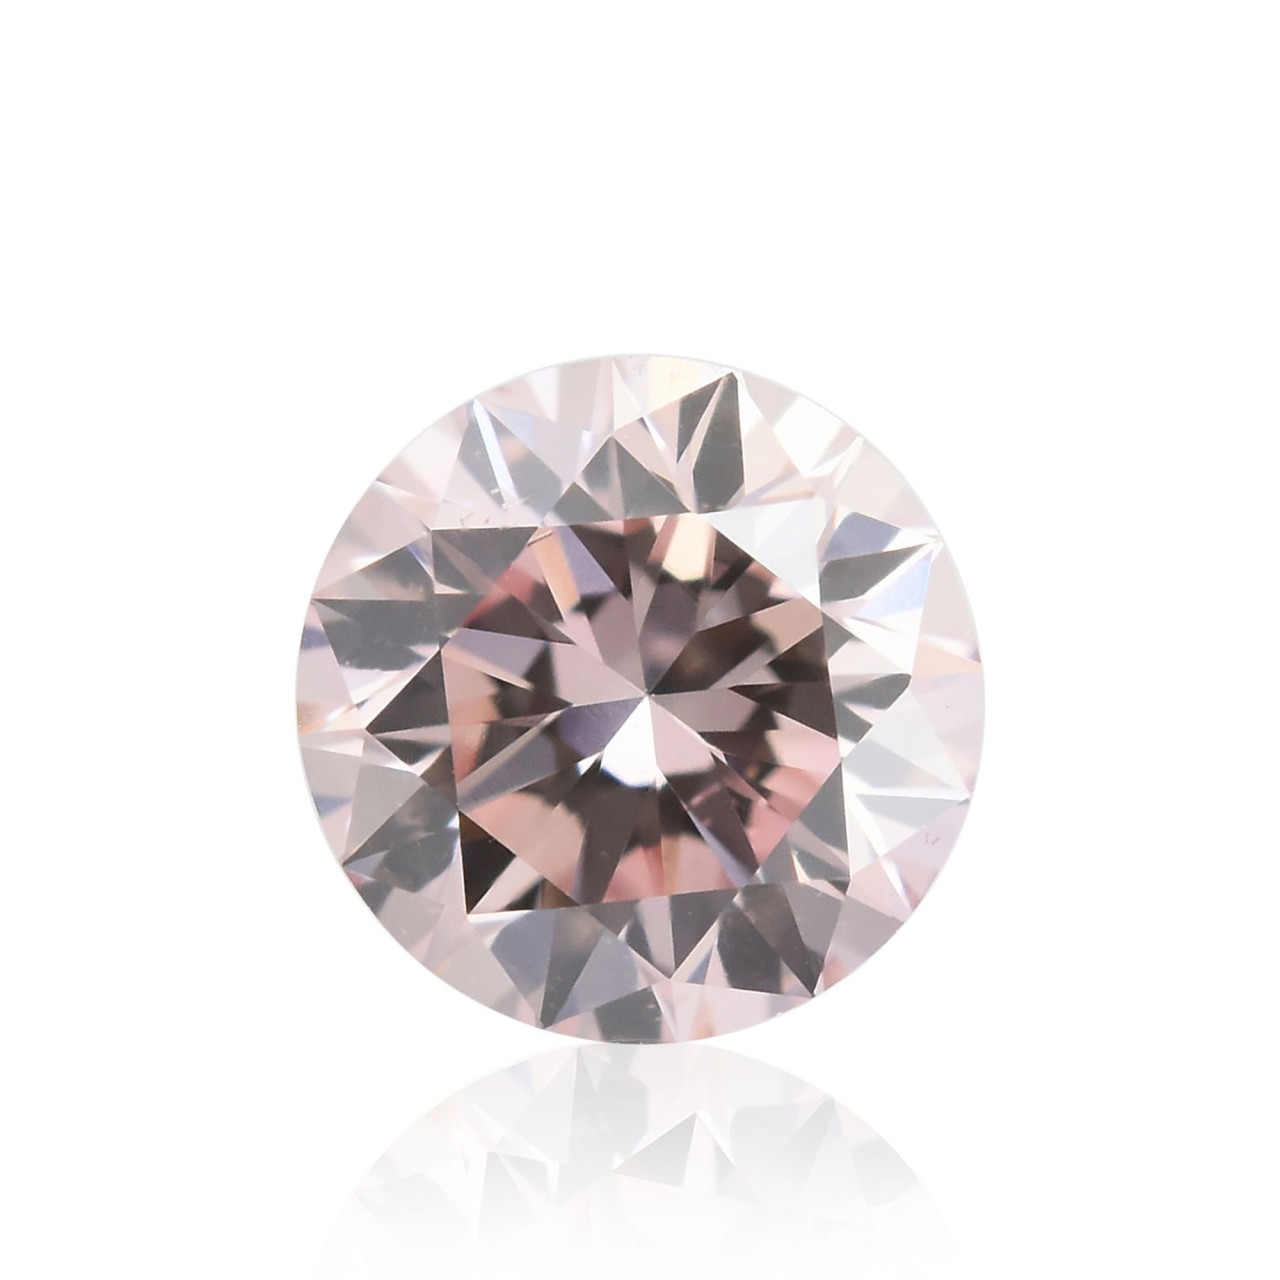 0.20 carat, Fancy Light Brownish Pink Diamond, PC1, Round Shape 